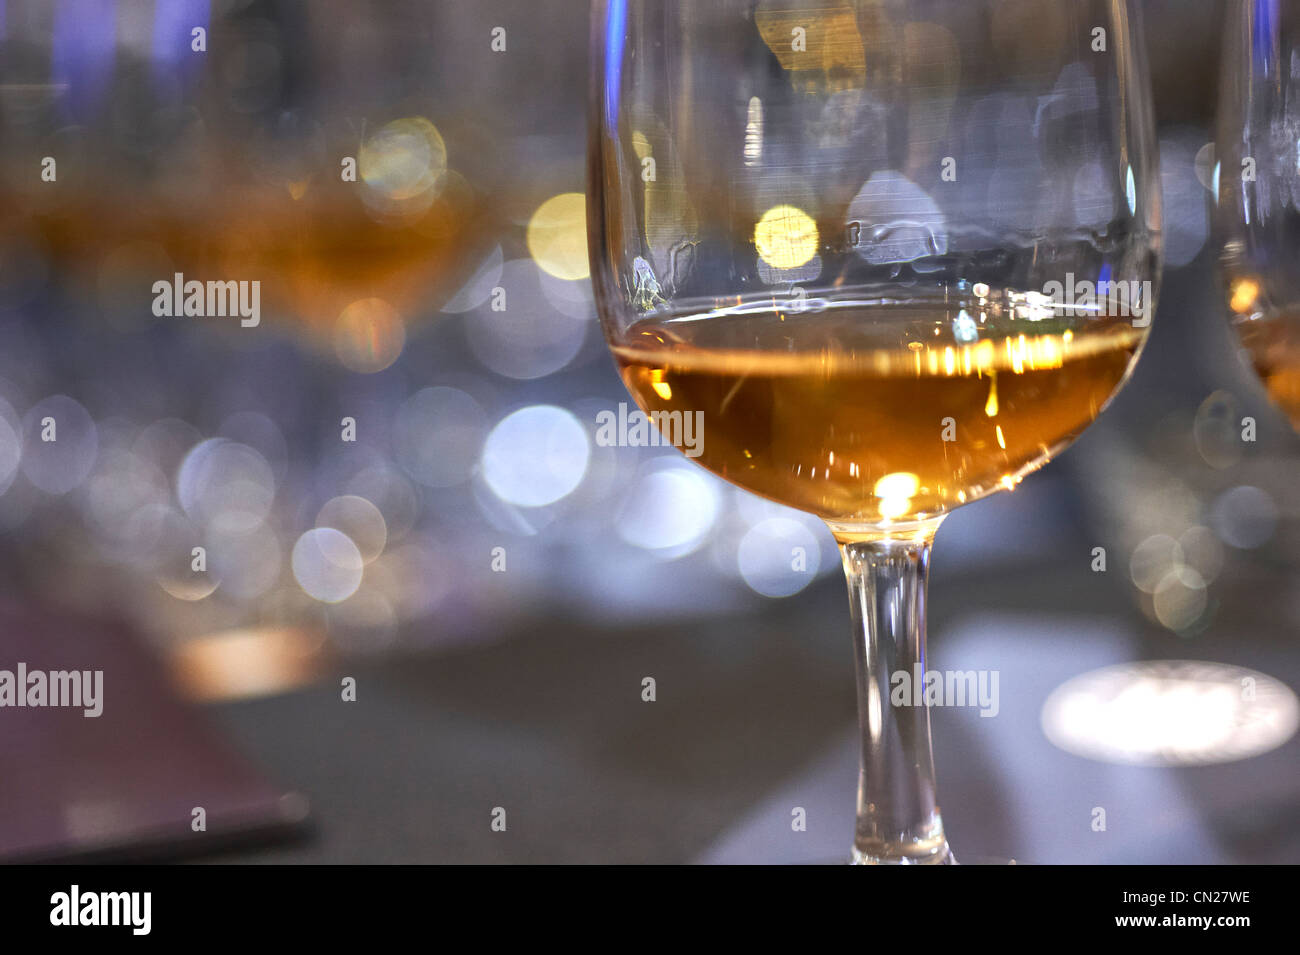 Whiskey Scottish Scotland drink alcohol alcoholic booze drunk glass scotch Stock Photo